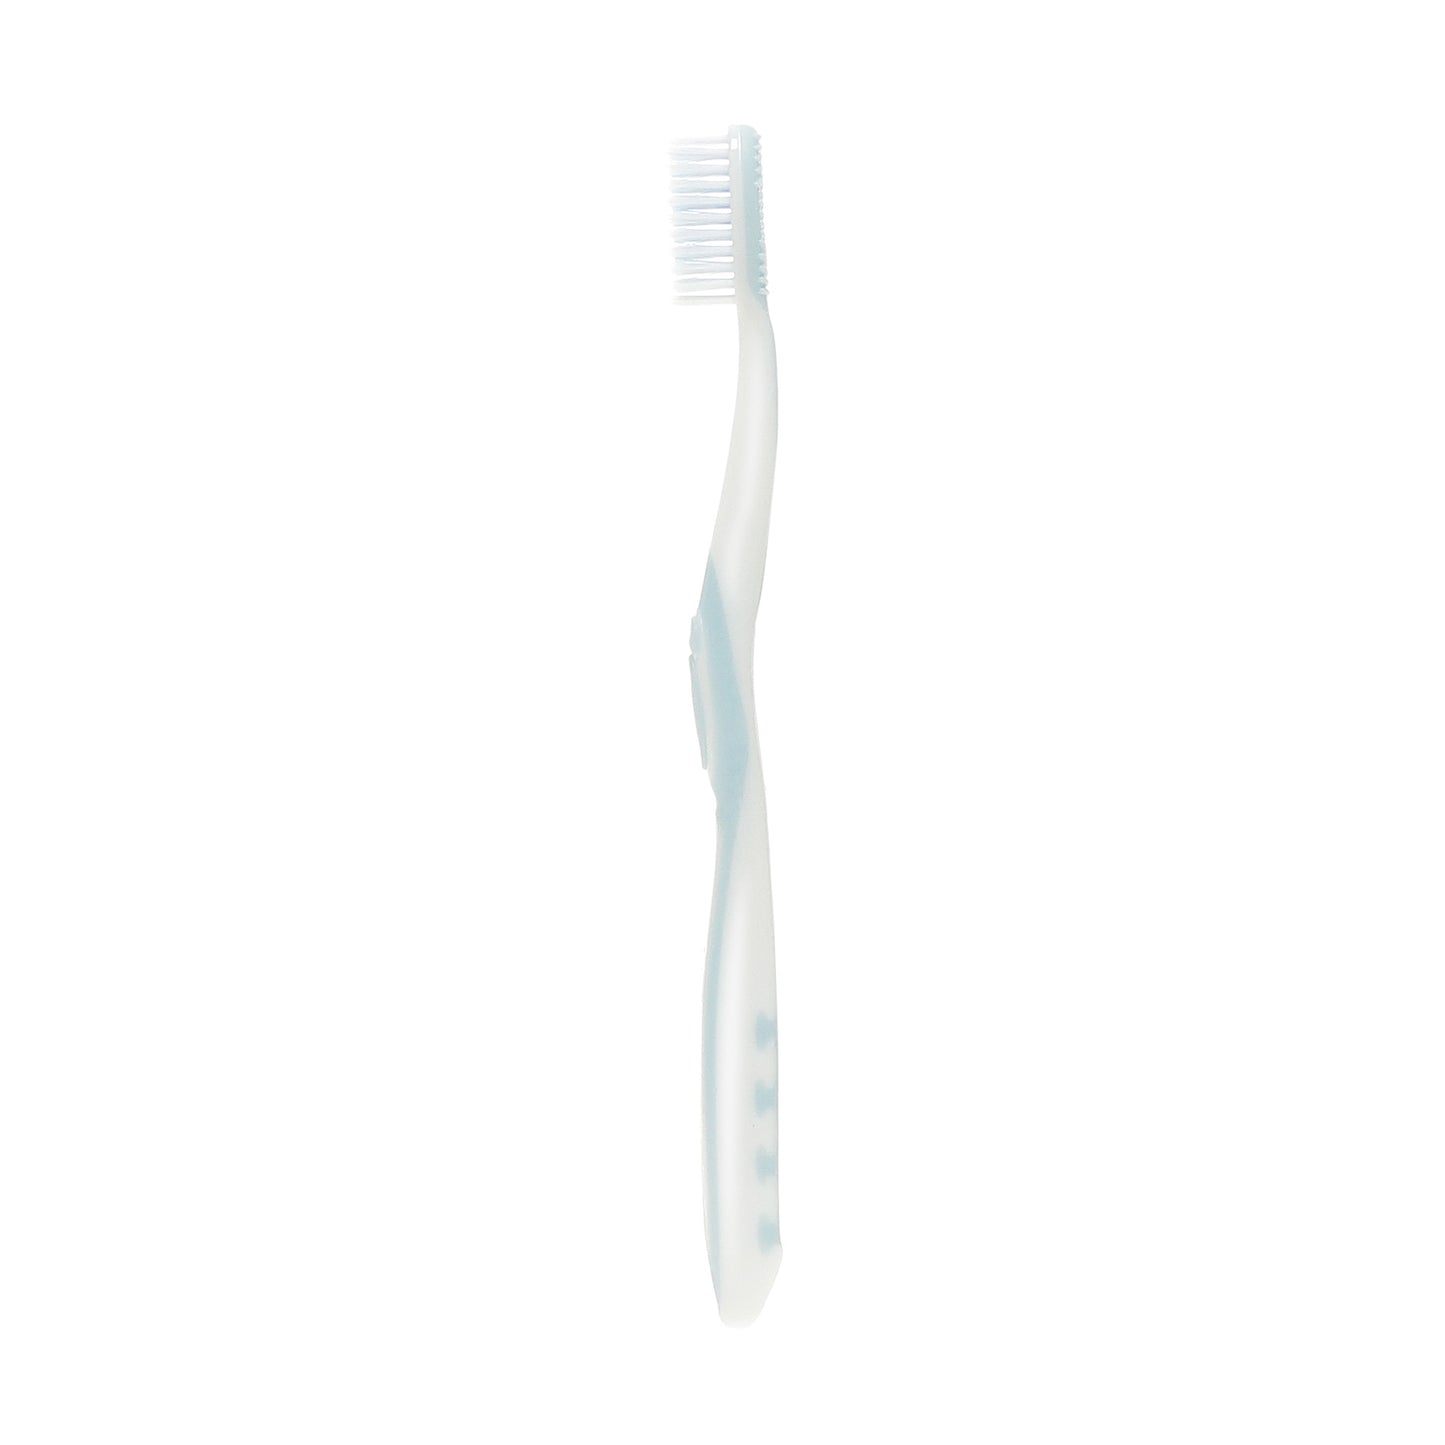 Alert Optimum Toothbrush Value Pack